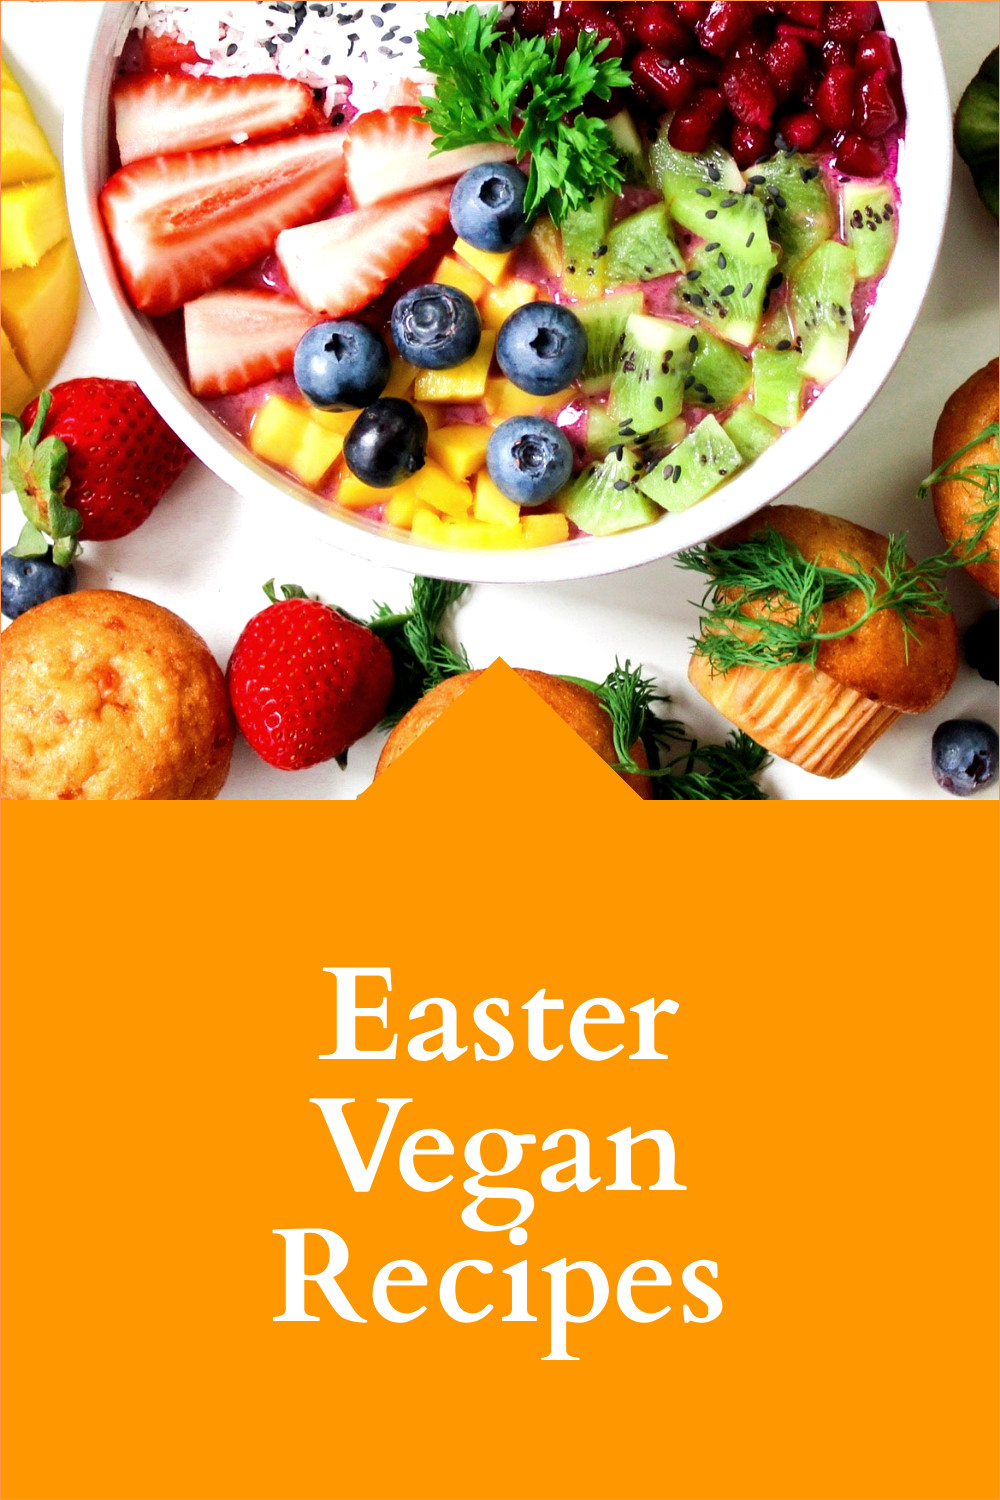 Easter Vegan Recipes Inline Rectangle 300x250